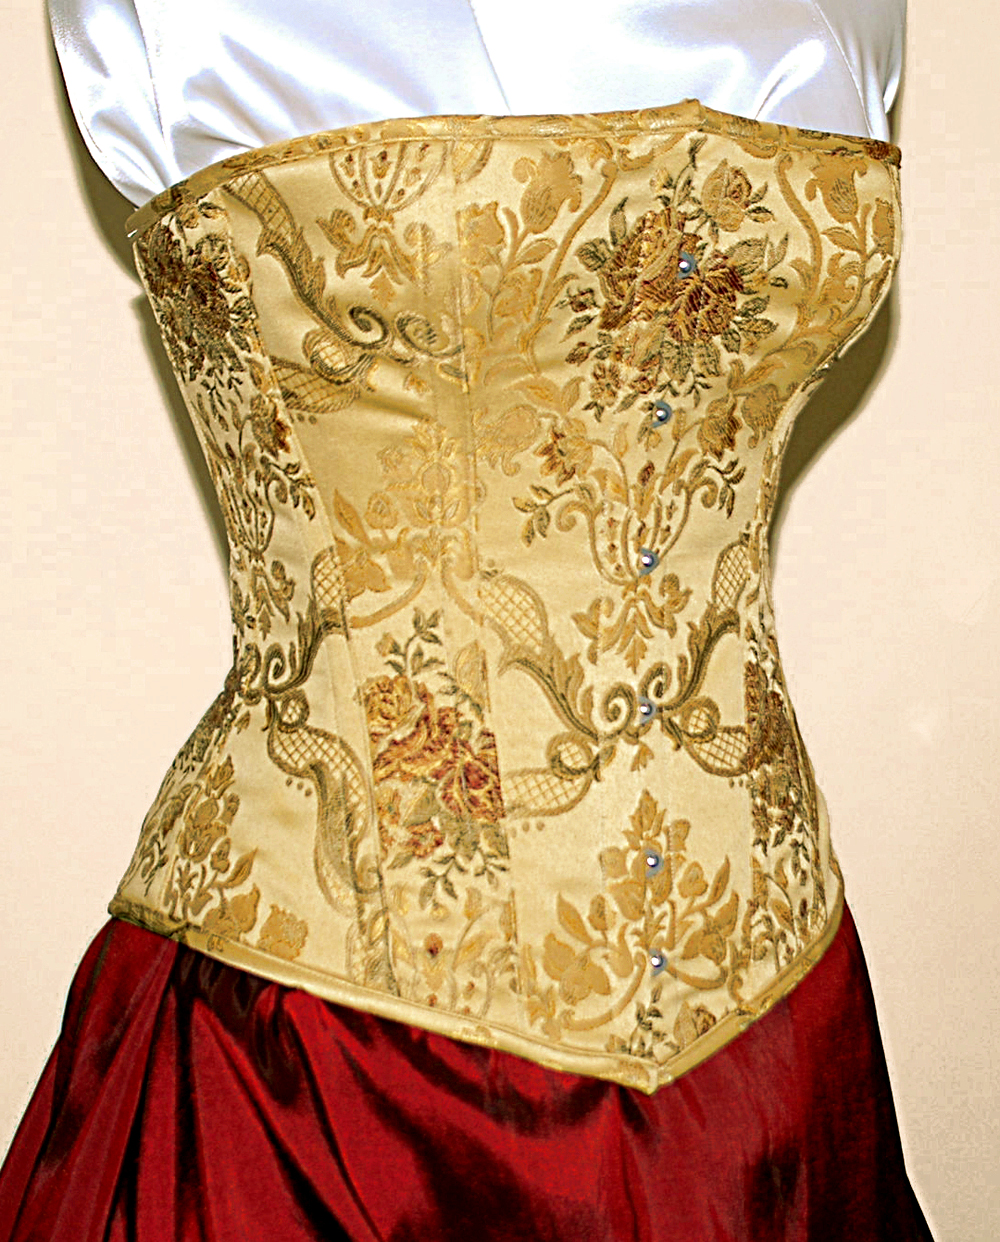 Gold brocade corset